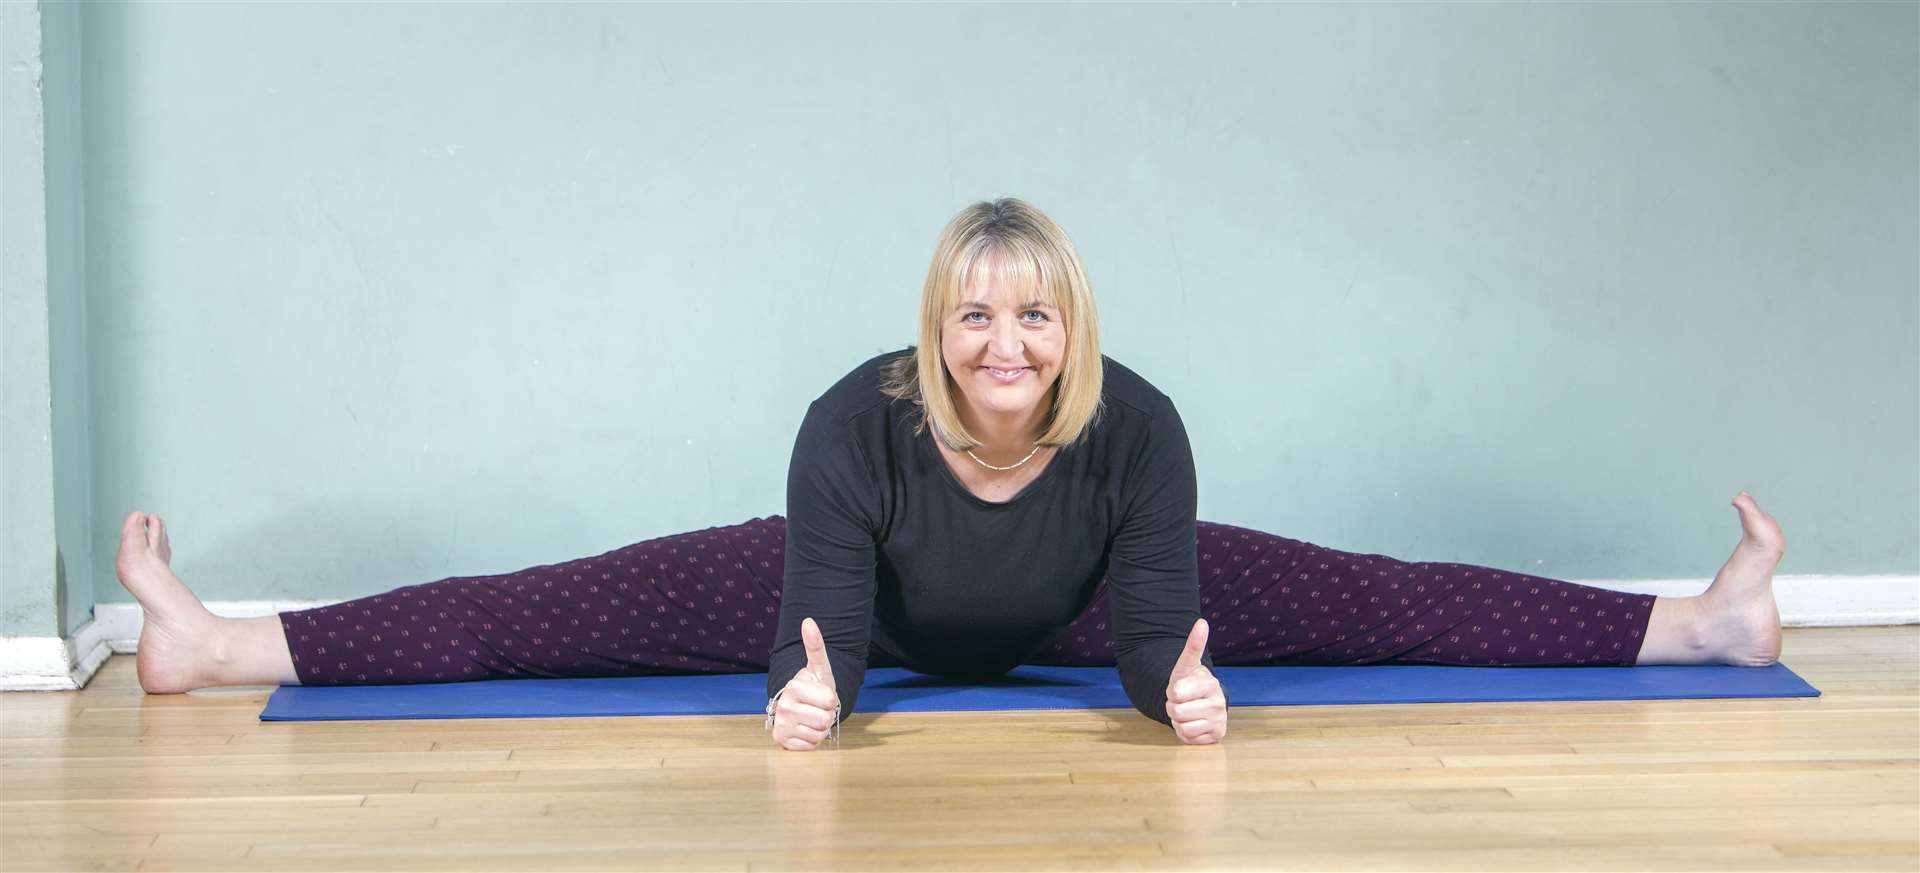 Natasha Harding teaches yoga classes in Kings Hill and Ryarsh Picture: carlfoxphoto.co.uk